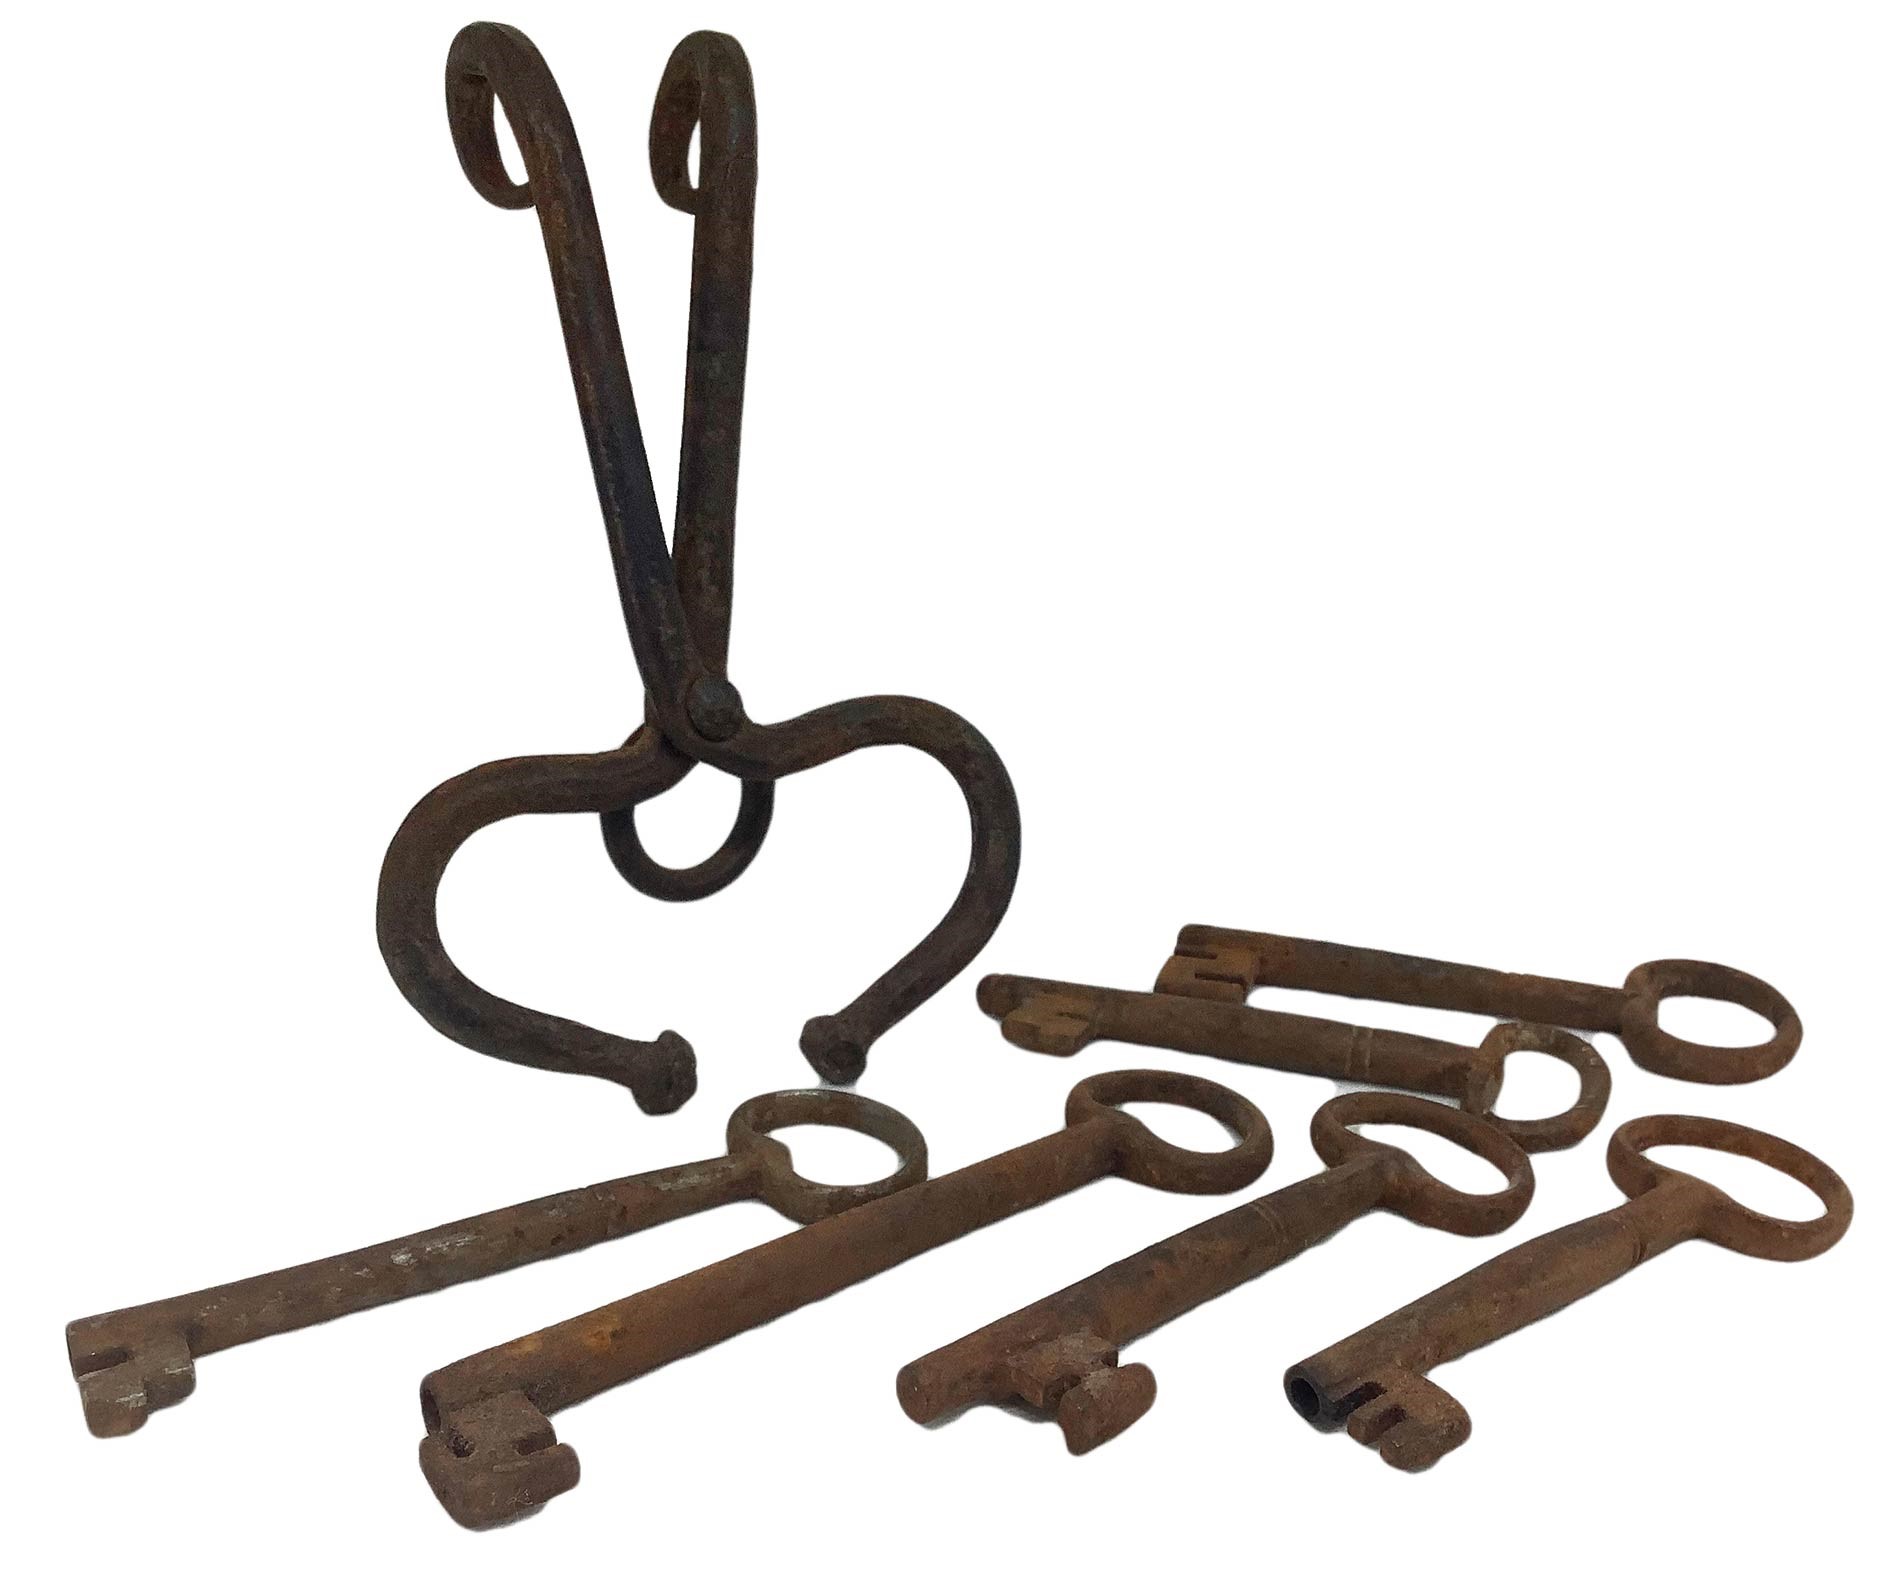 Gruppo n. 6 di chiavi antiche in ferro (Fine XIX secolo) - Asta